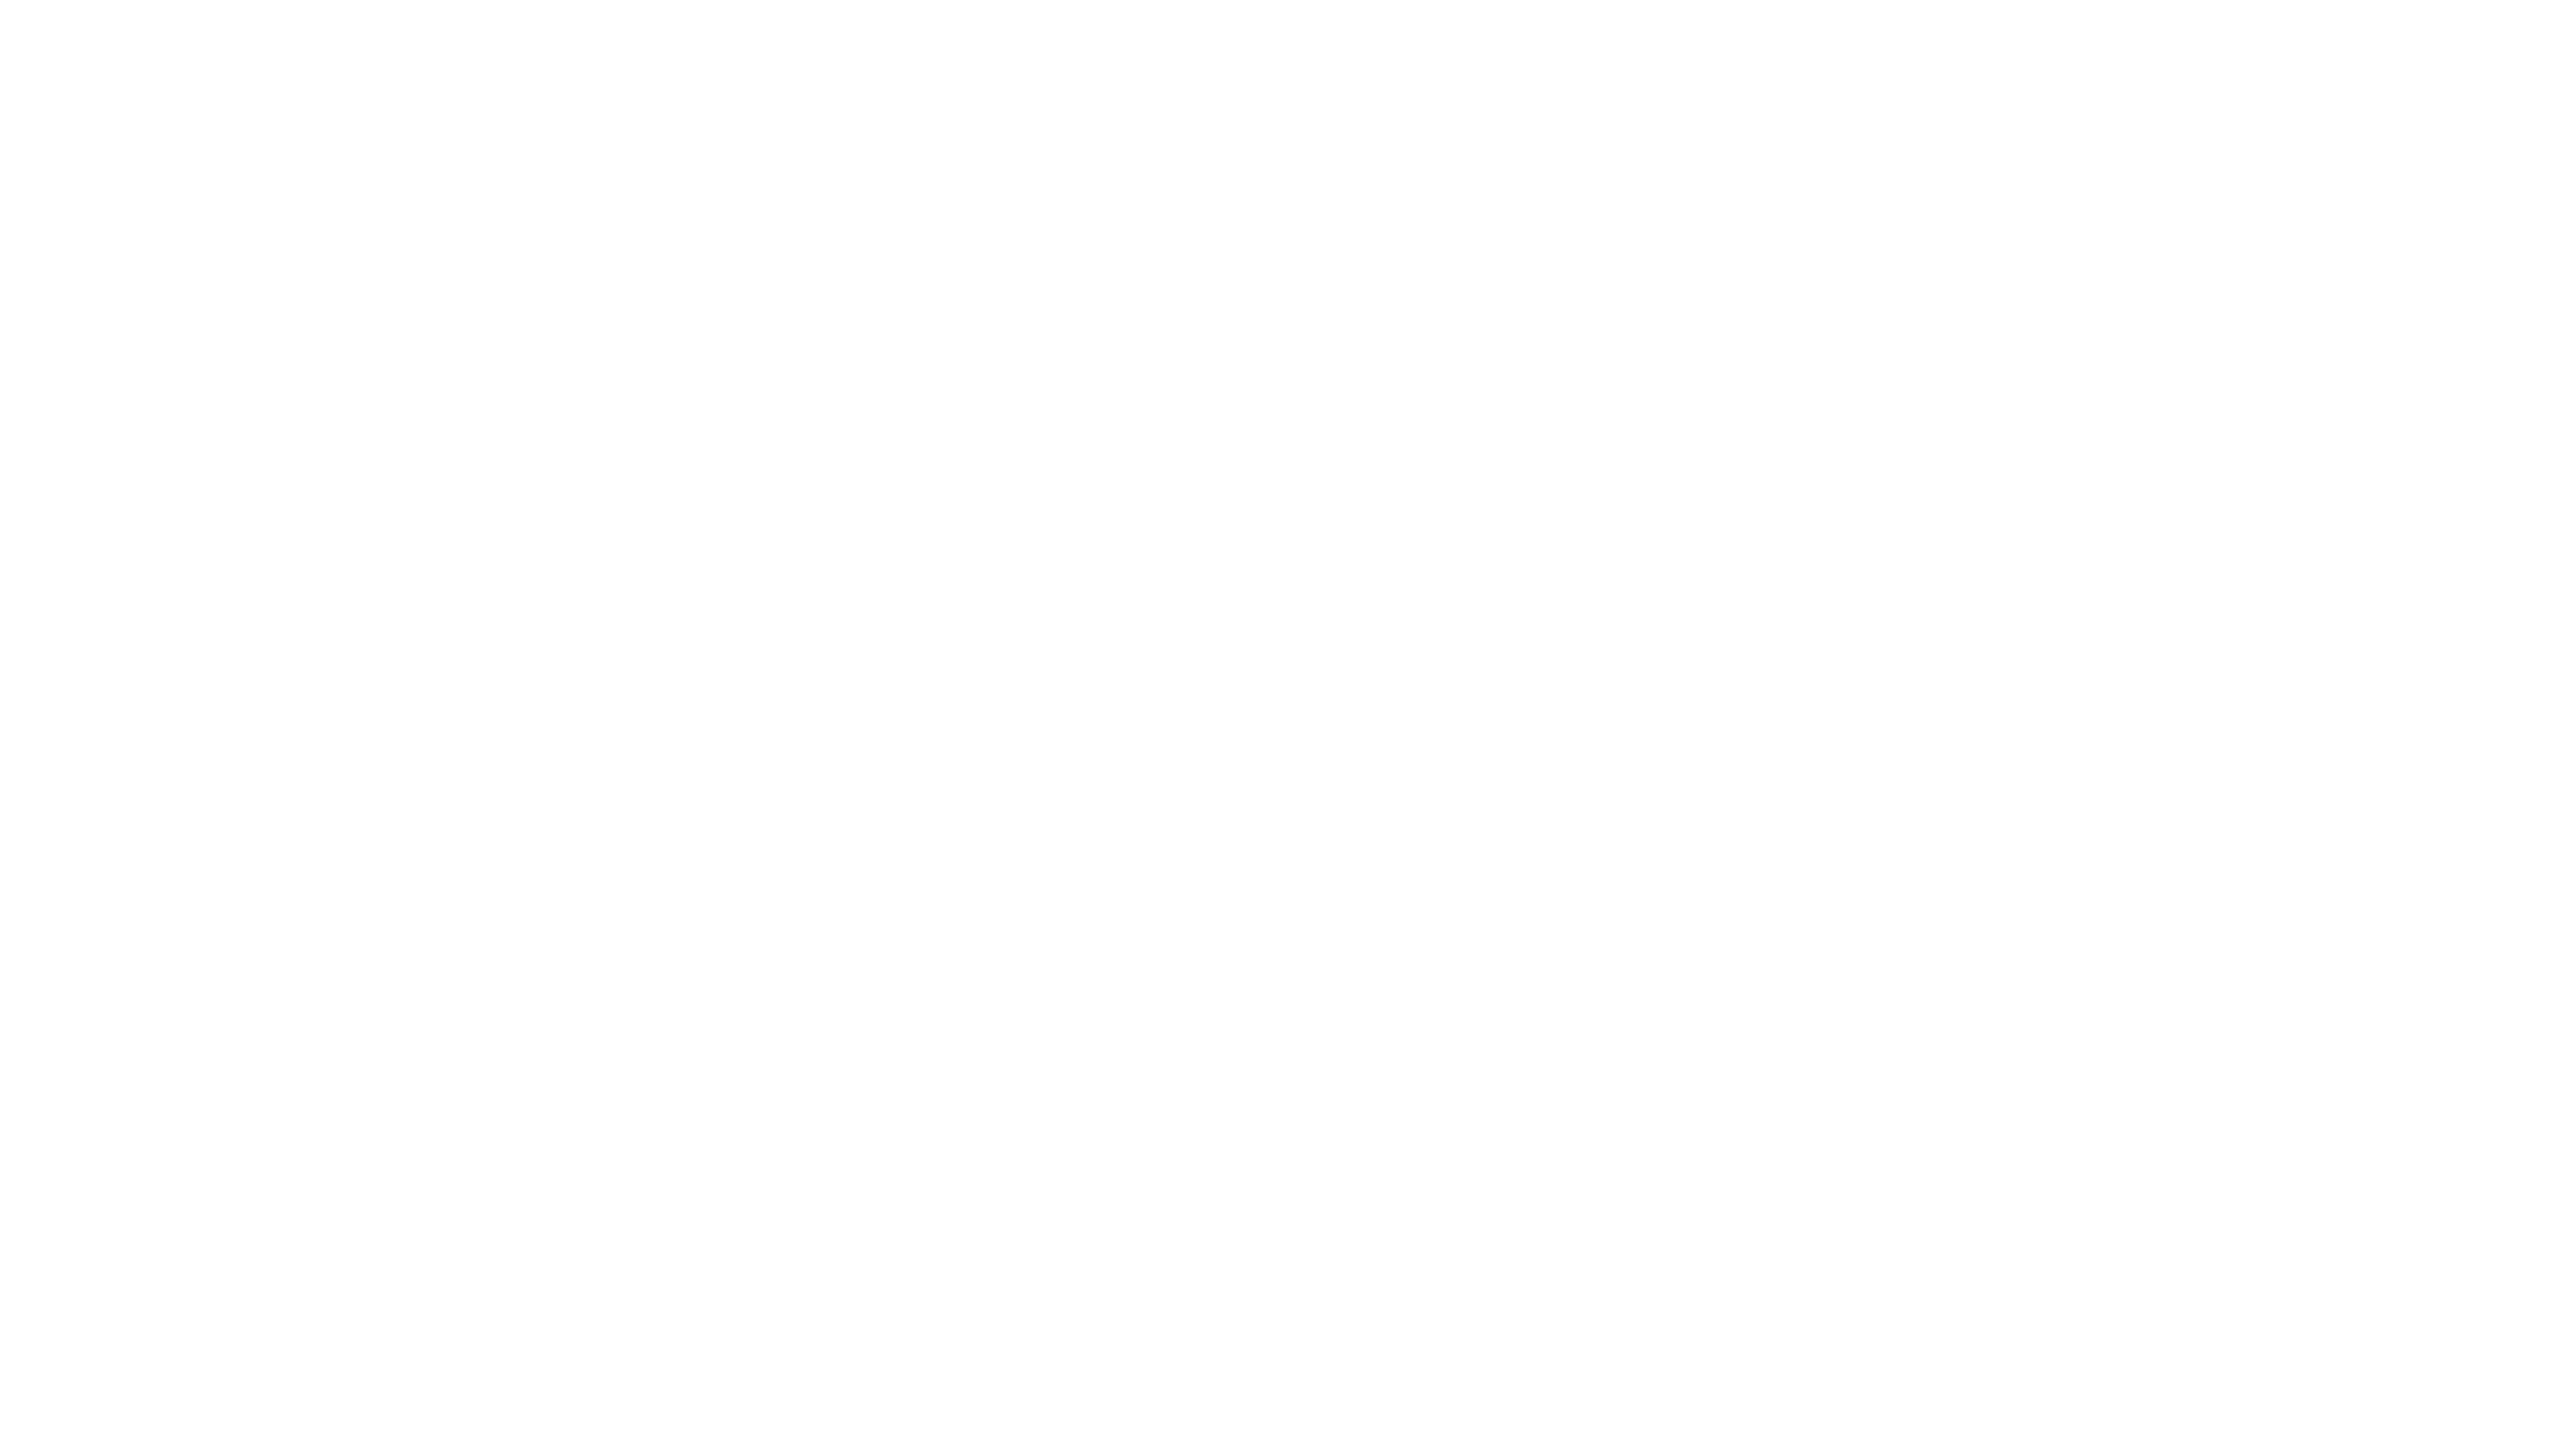 Co.lab logo in White